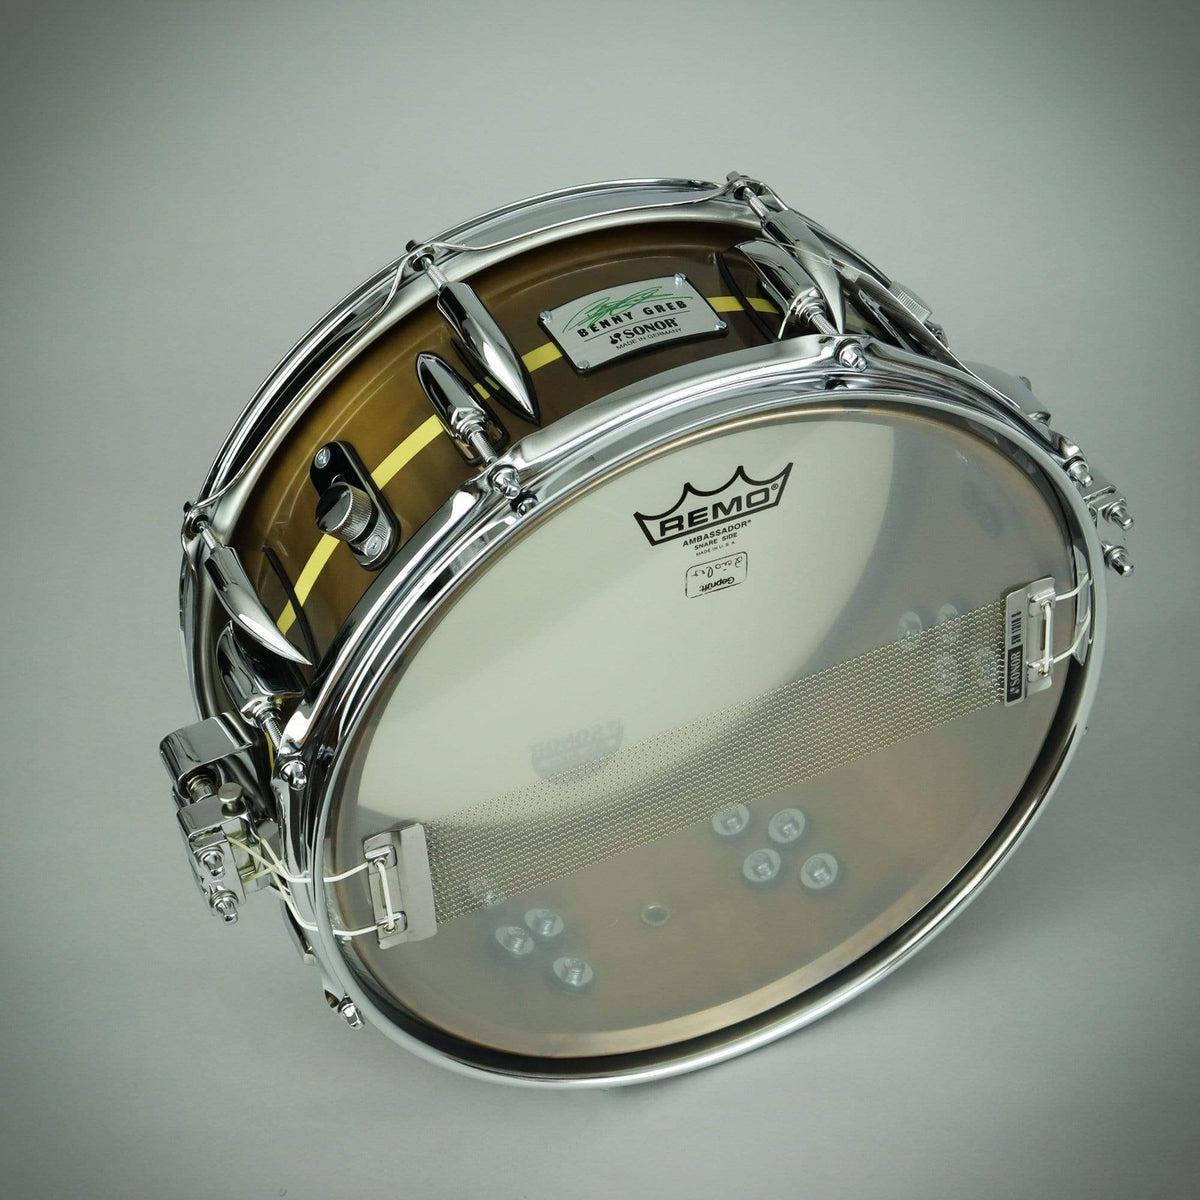 Sonor Benny Greb 13"x5.75" Brass Shell Snare Drum